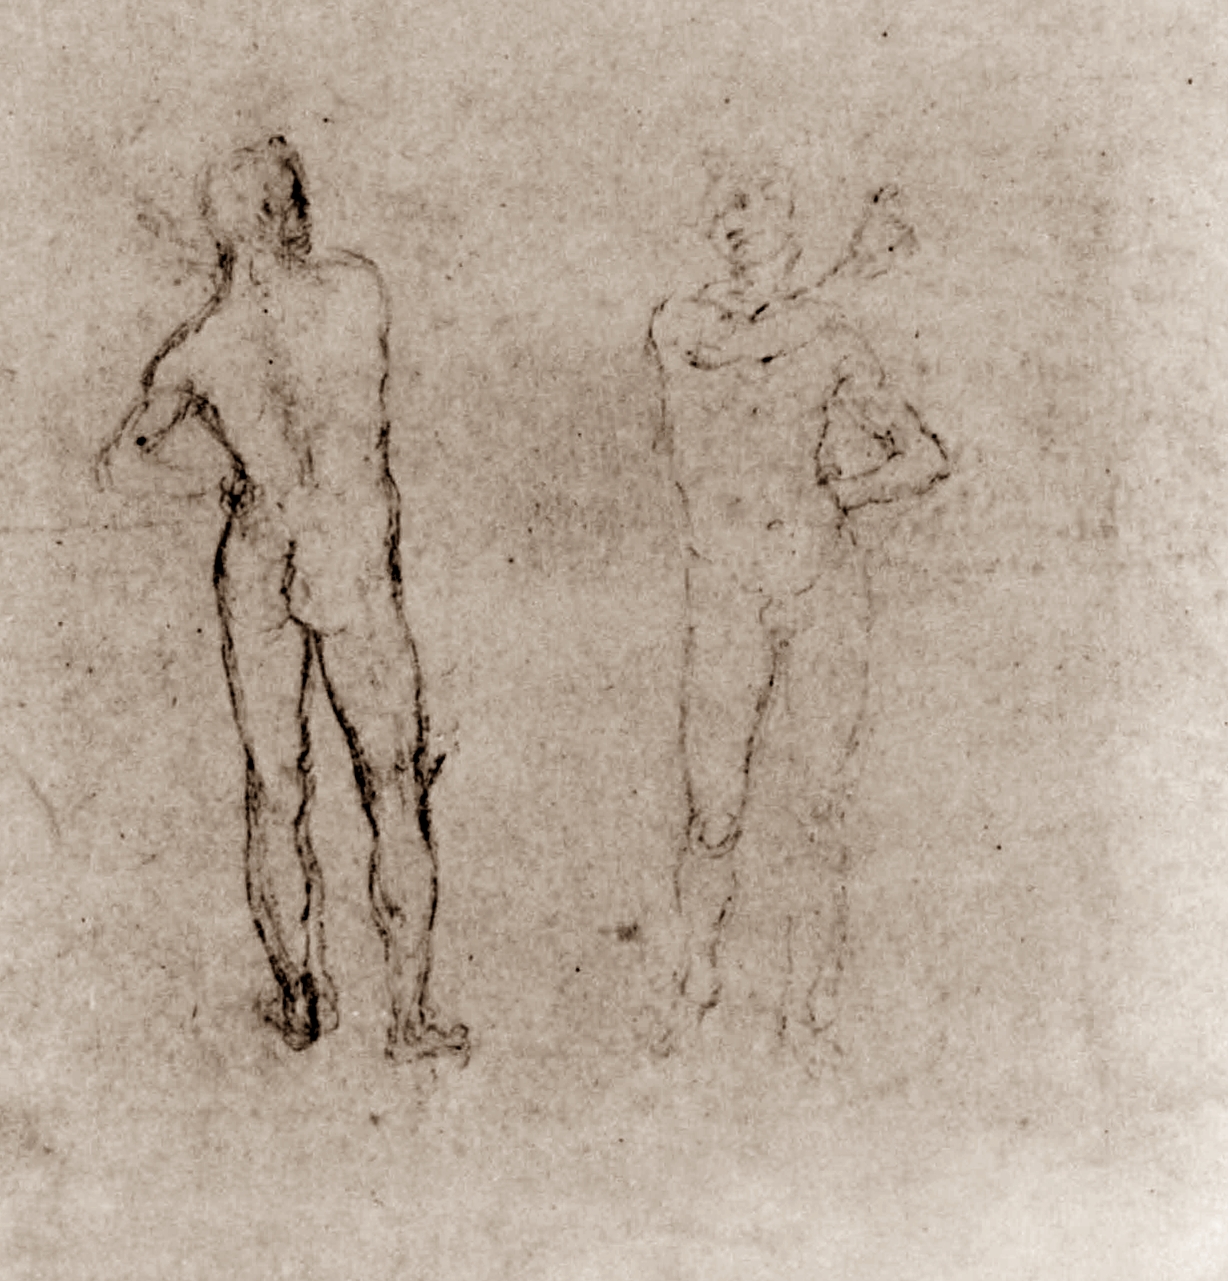 Leonardo+da+Vinci-1452-1519 (827).jpg